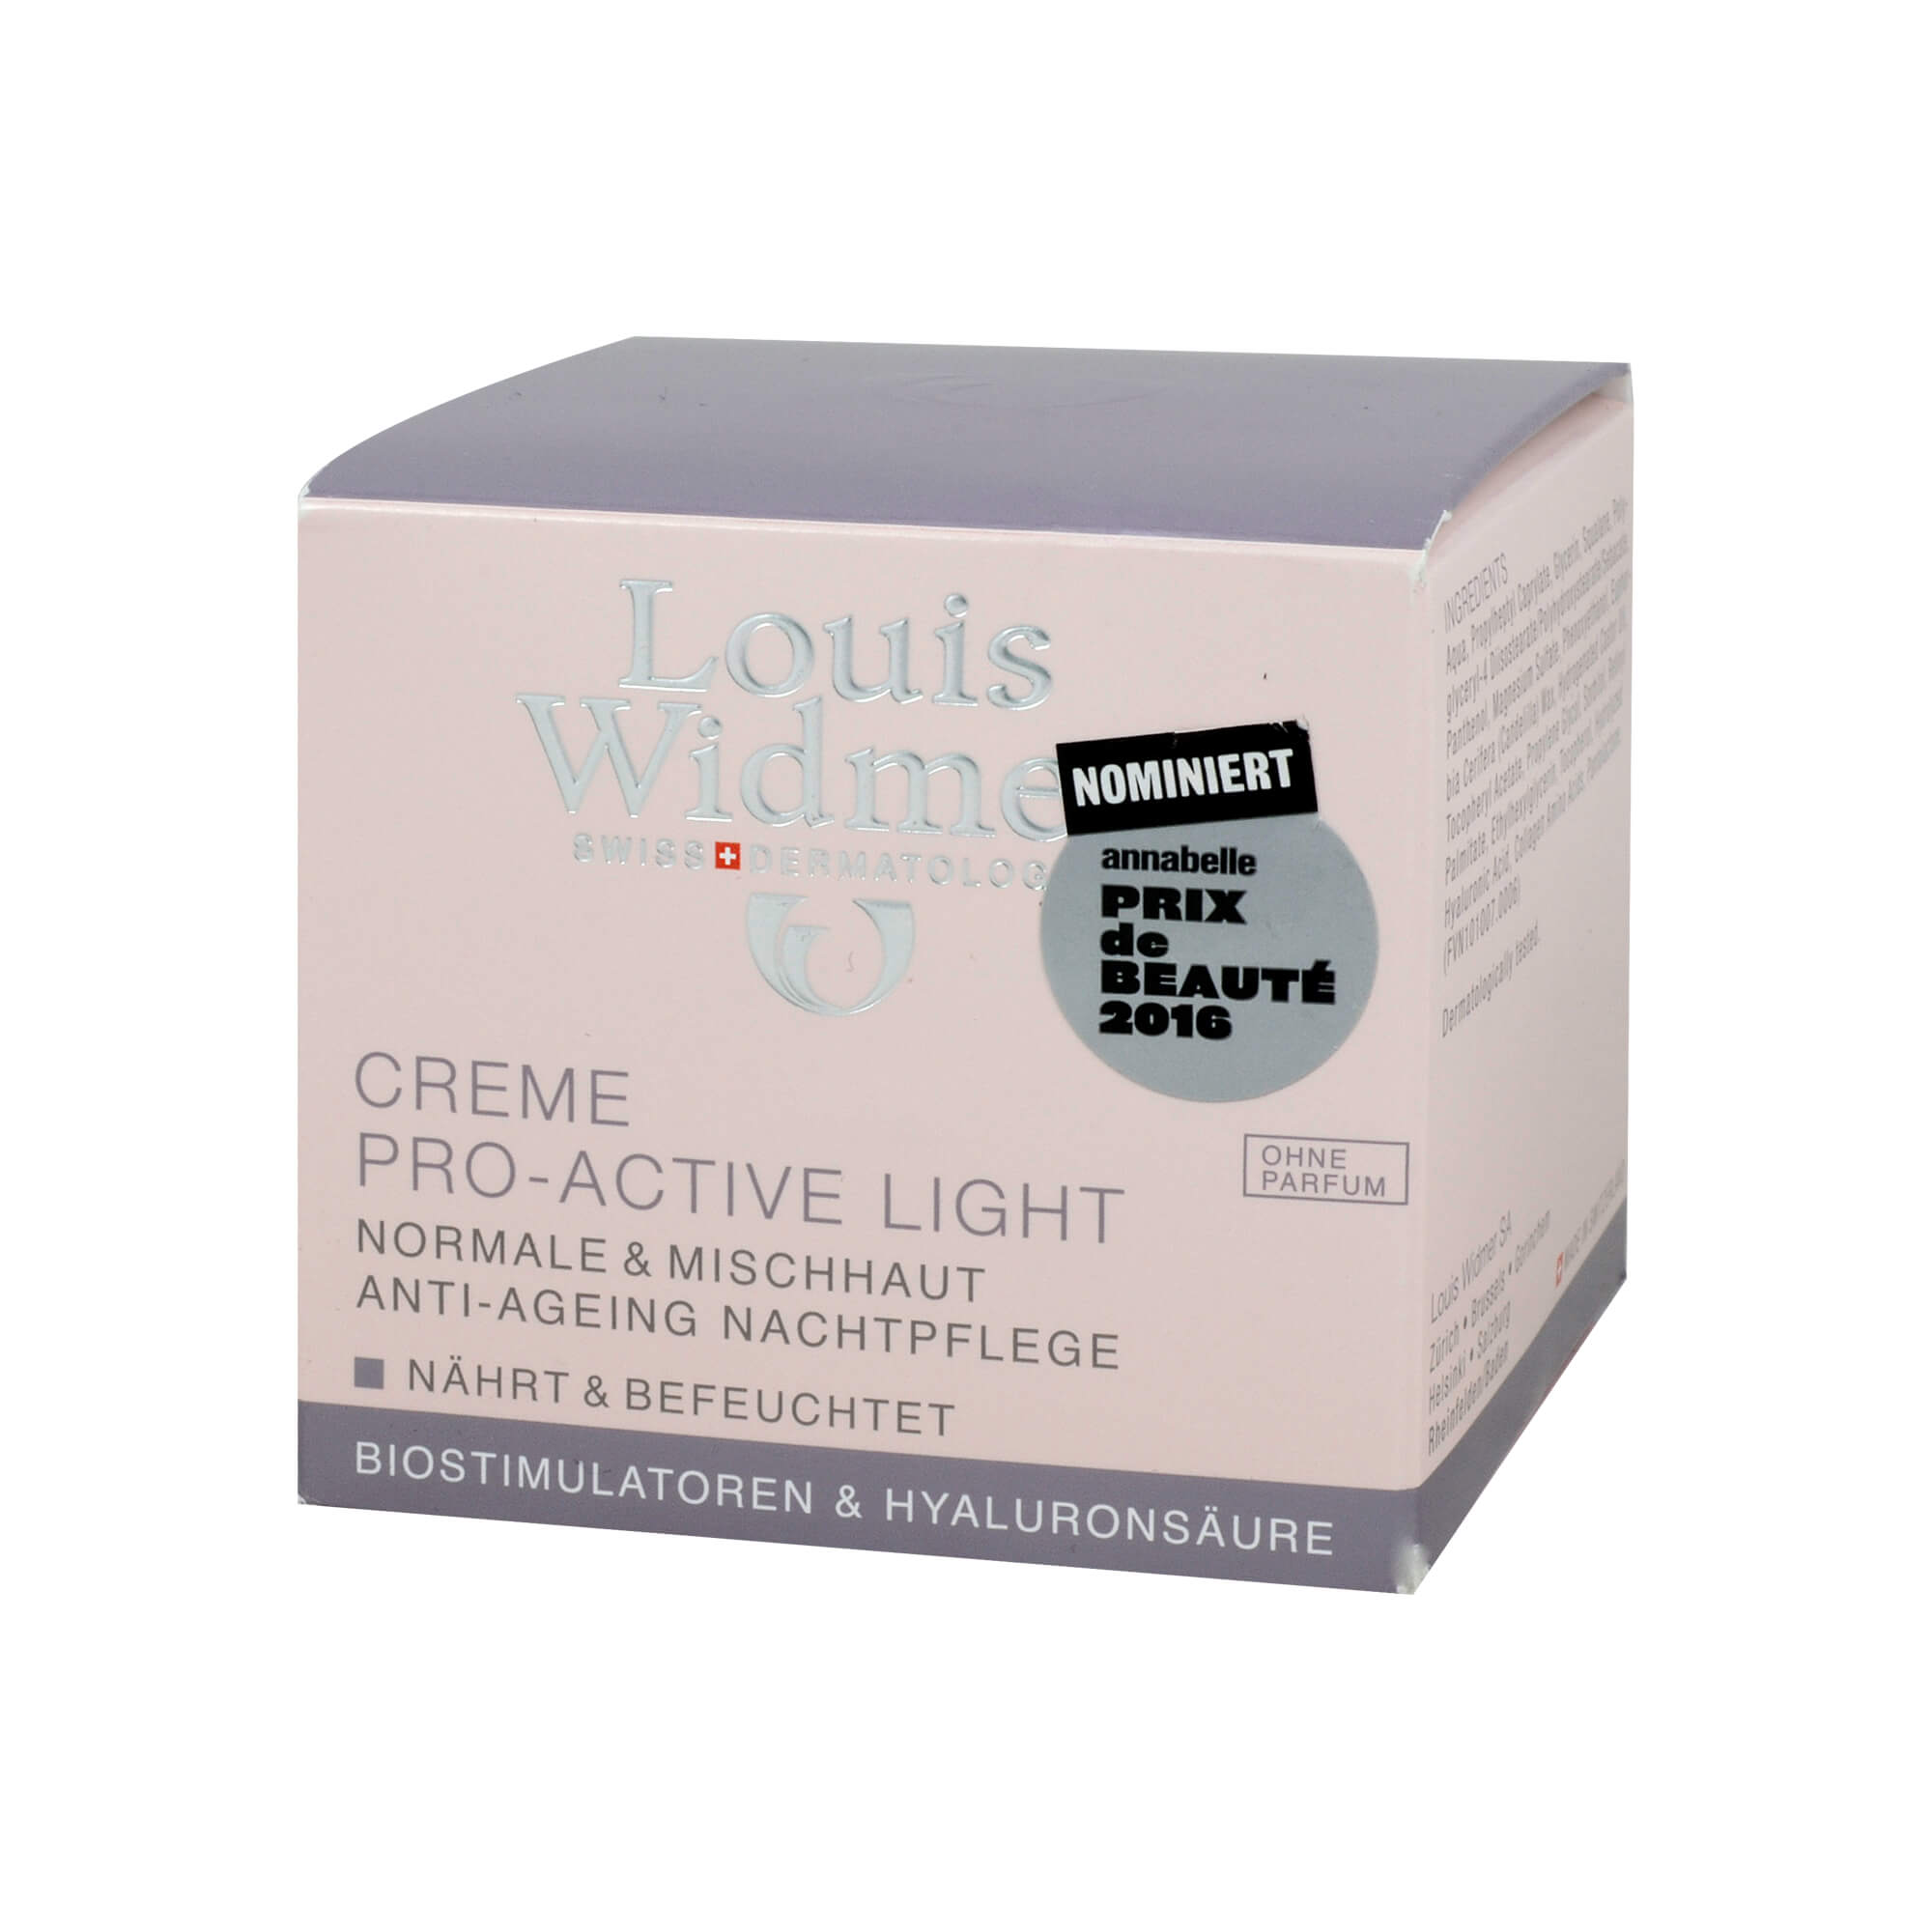 Louis Widmer Creme Pro-Active Light unparfümiert